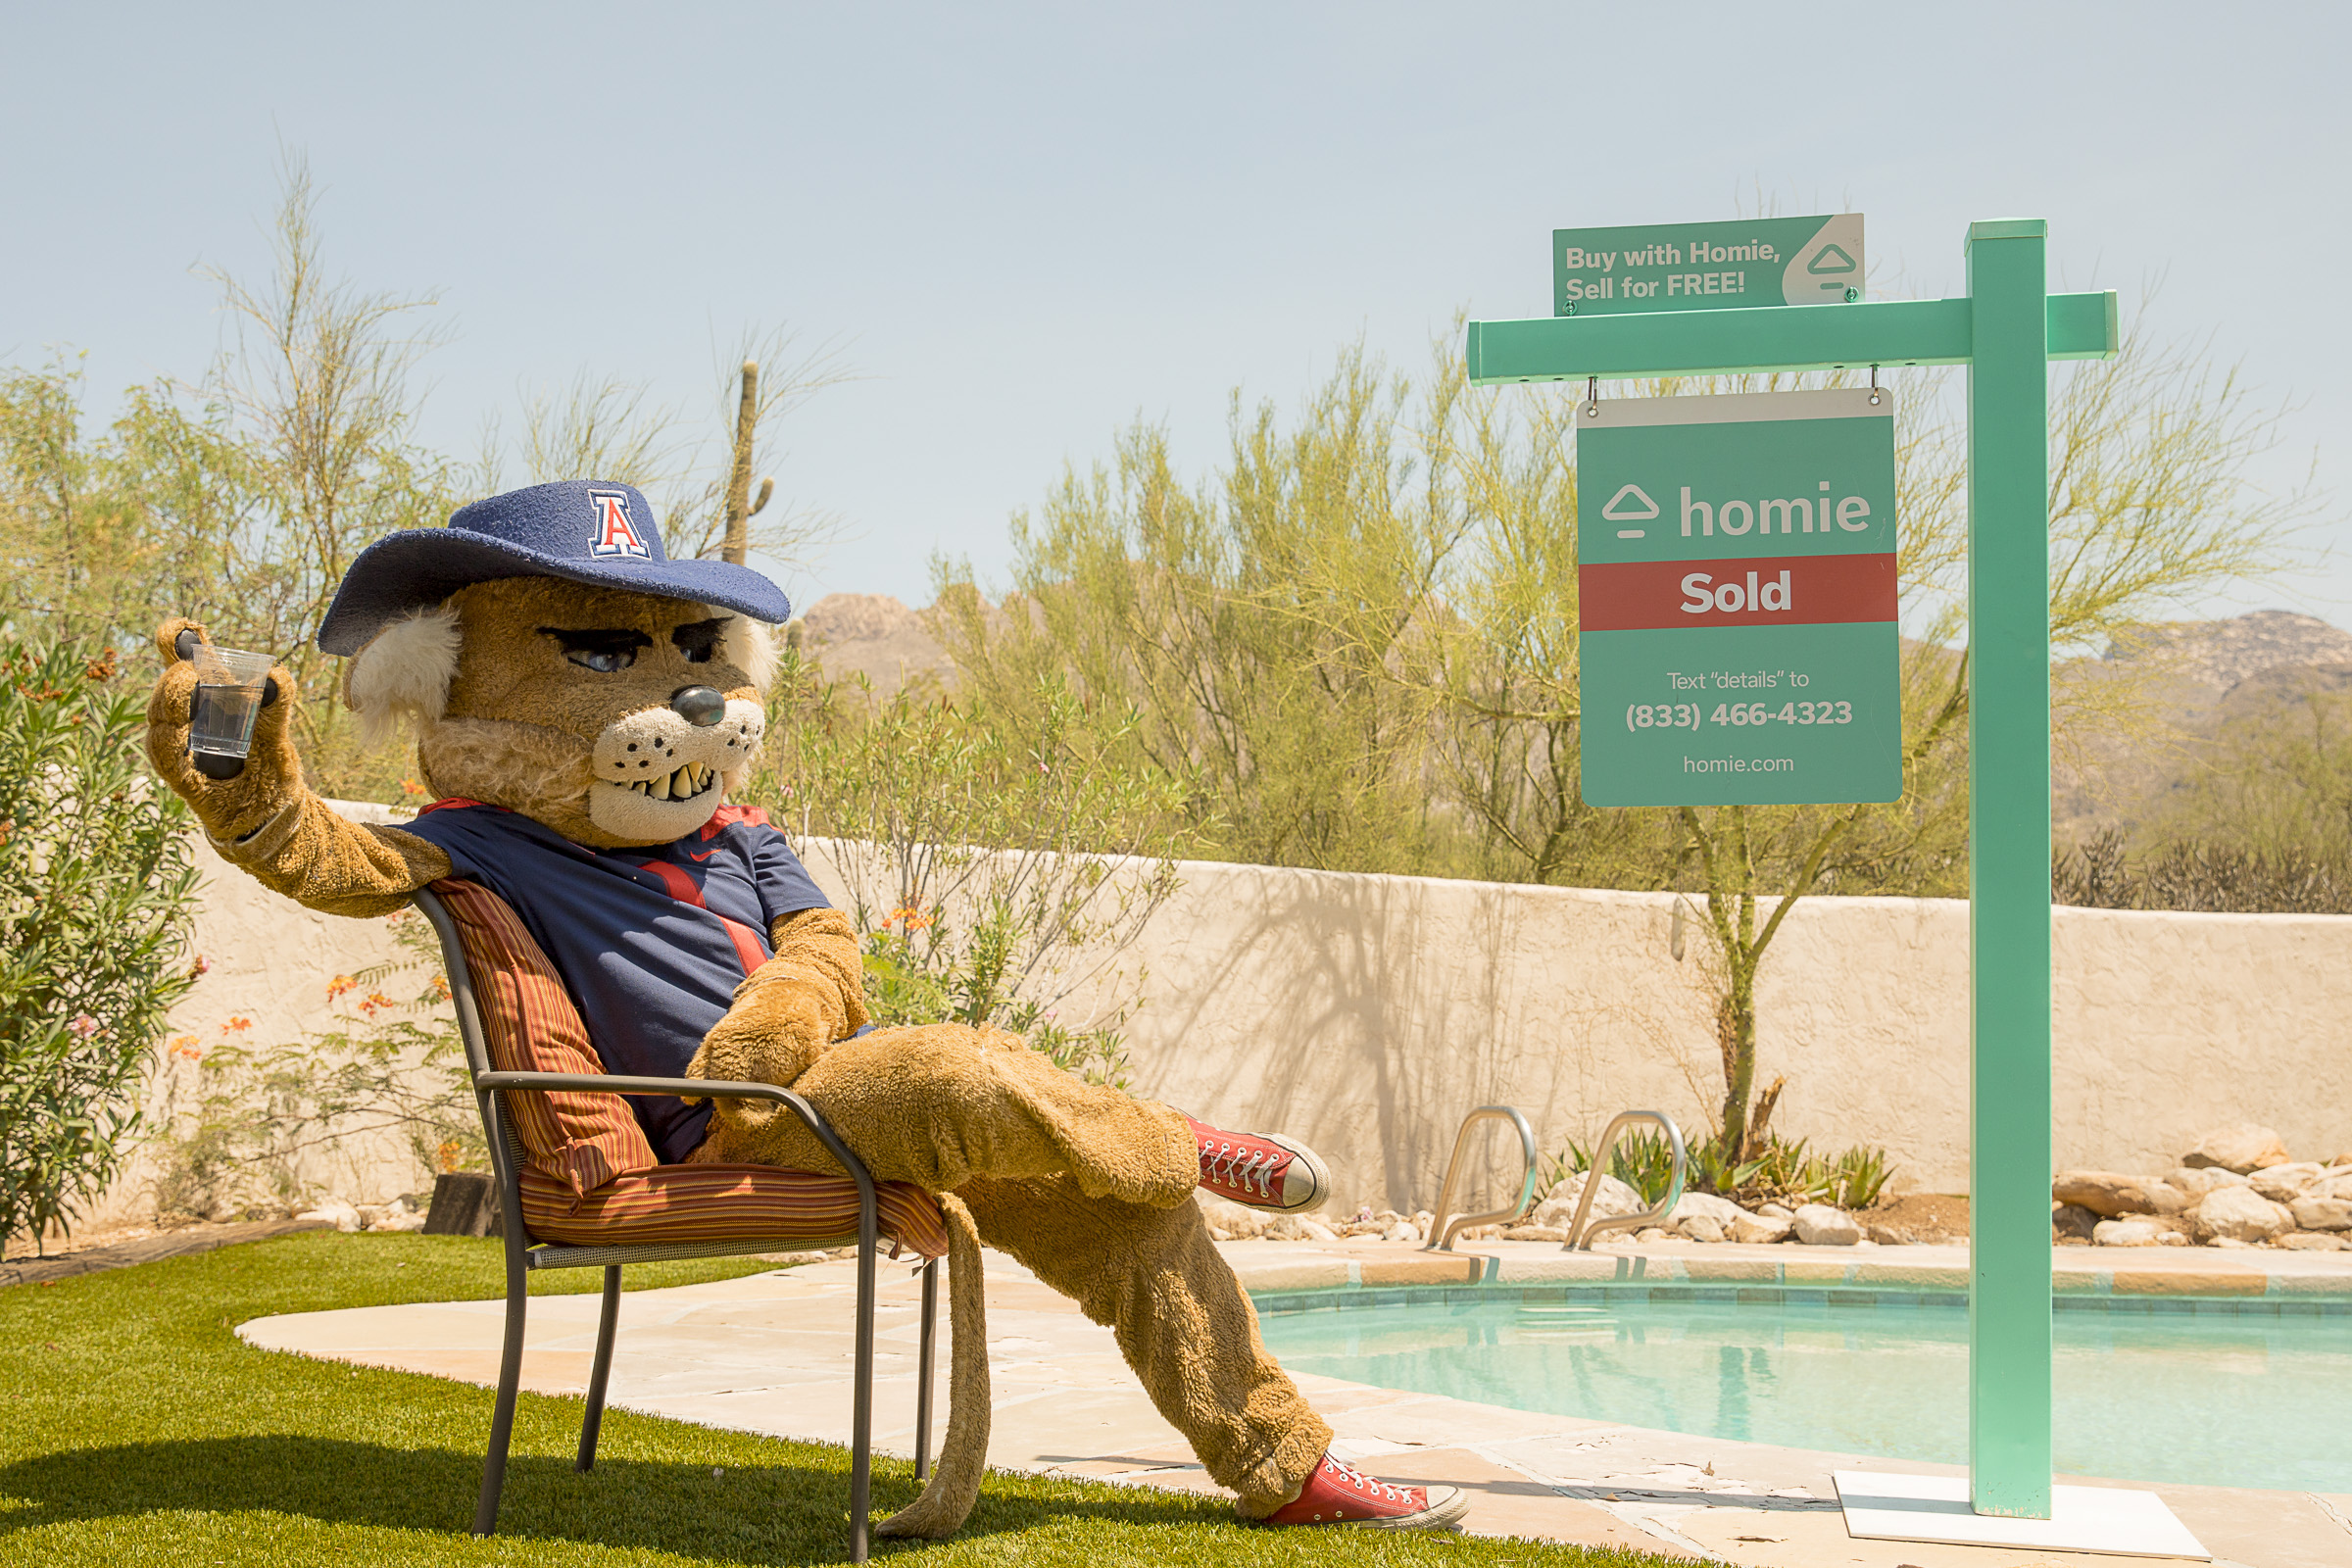 Wilbur the Wildcat welcoming Homie to the Tucson neighborhood.